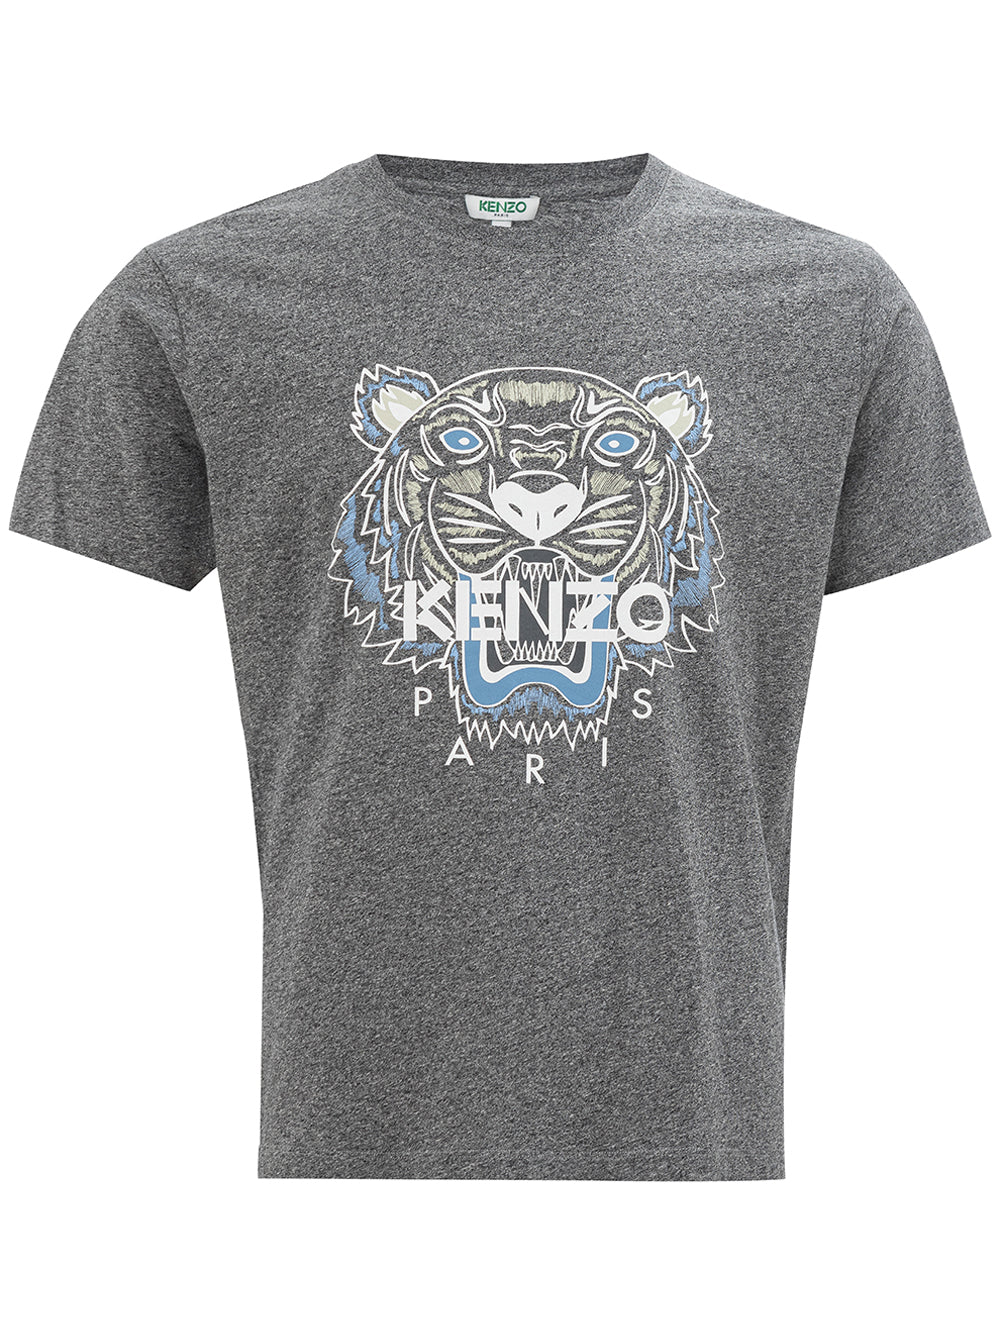 T-shirt Kenzo Stampa Tigre